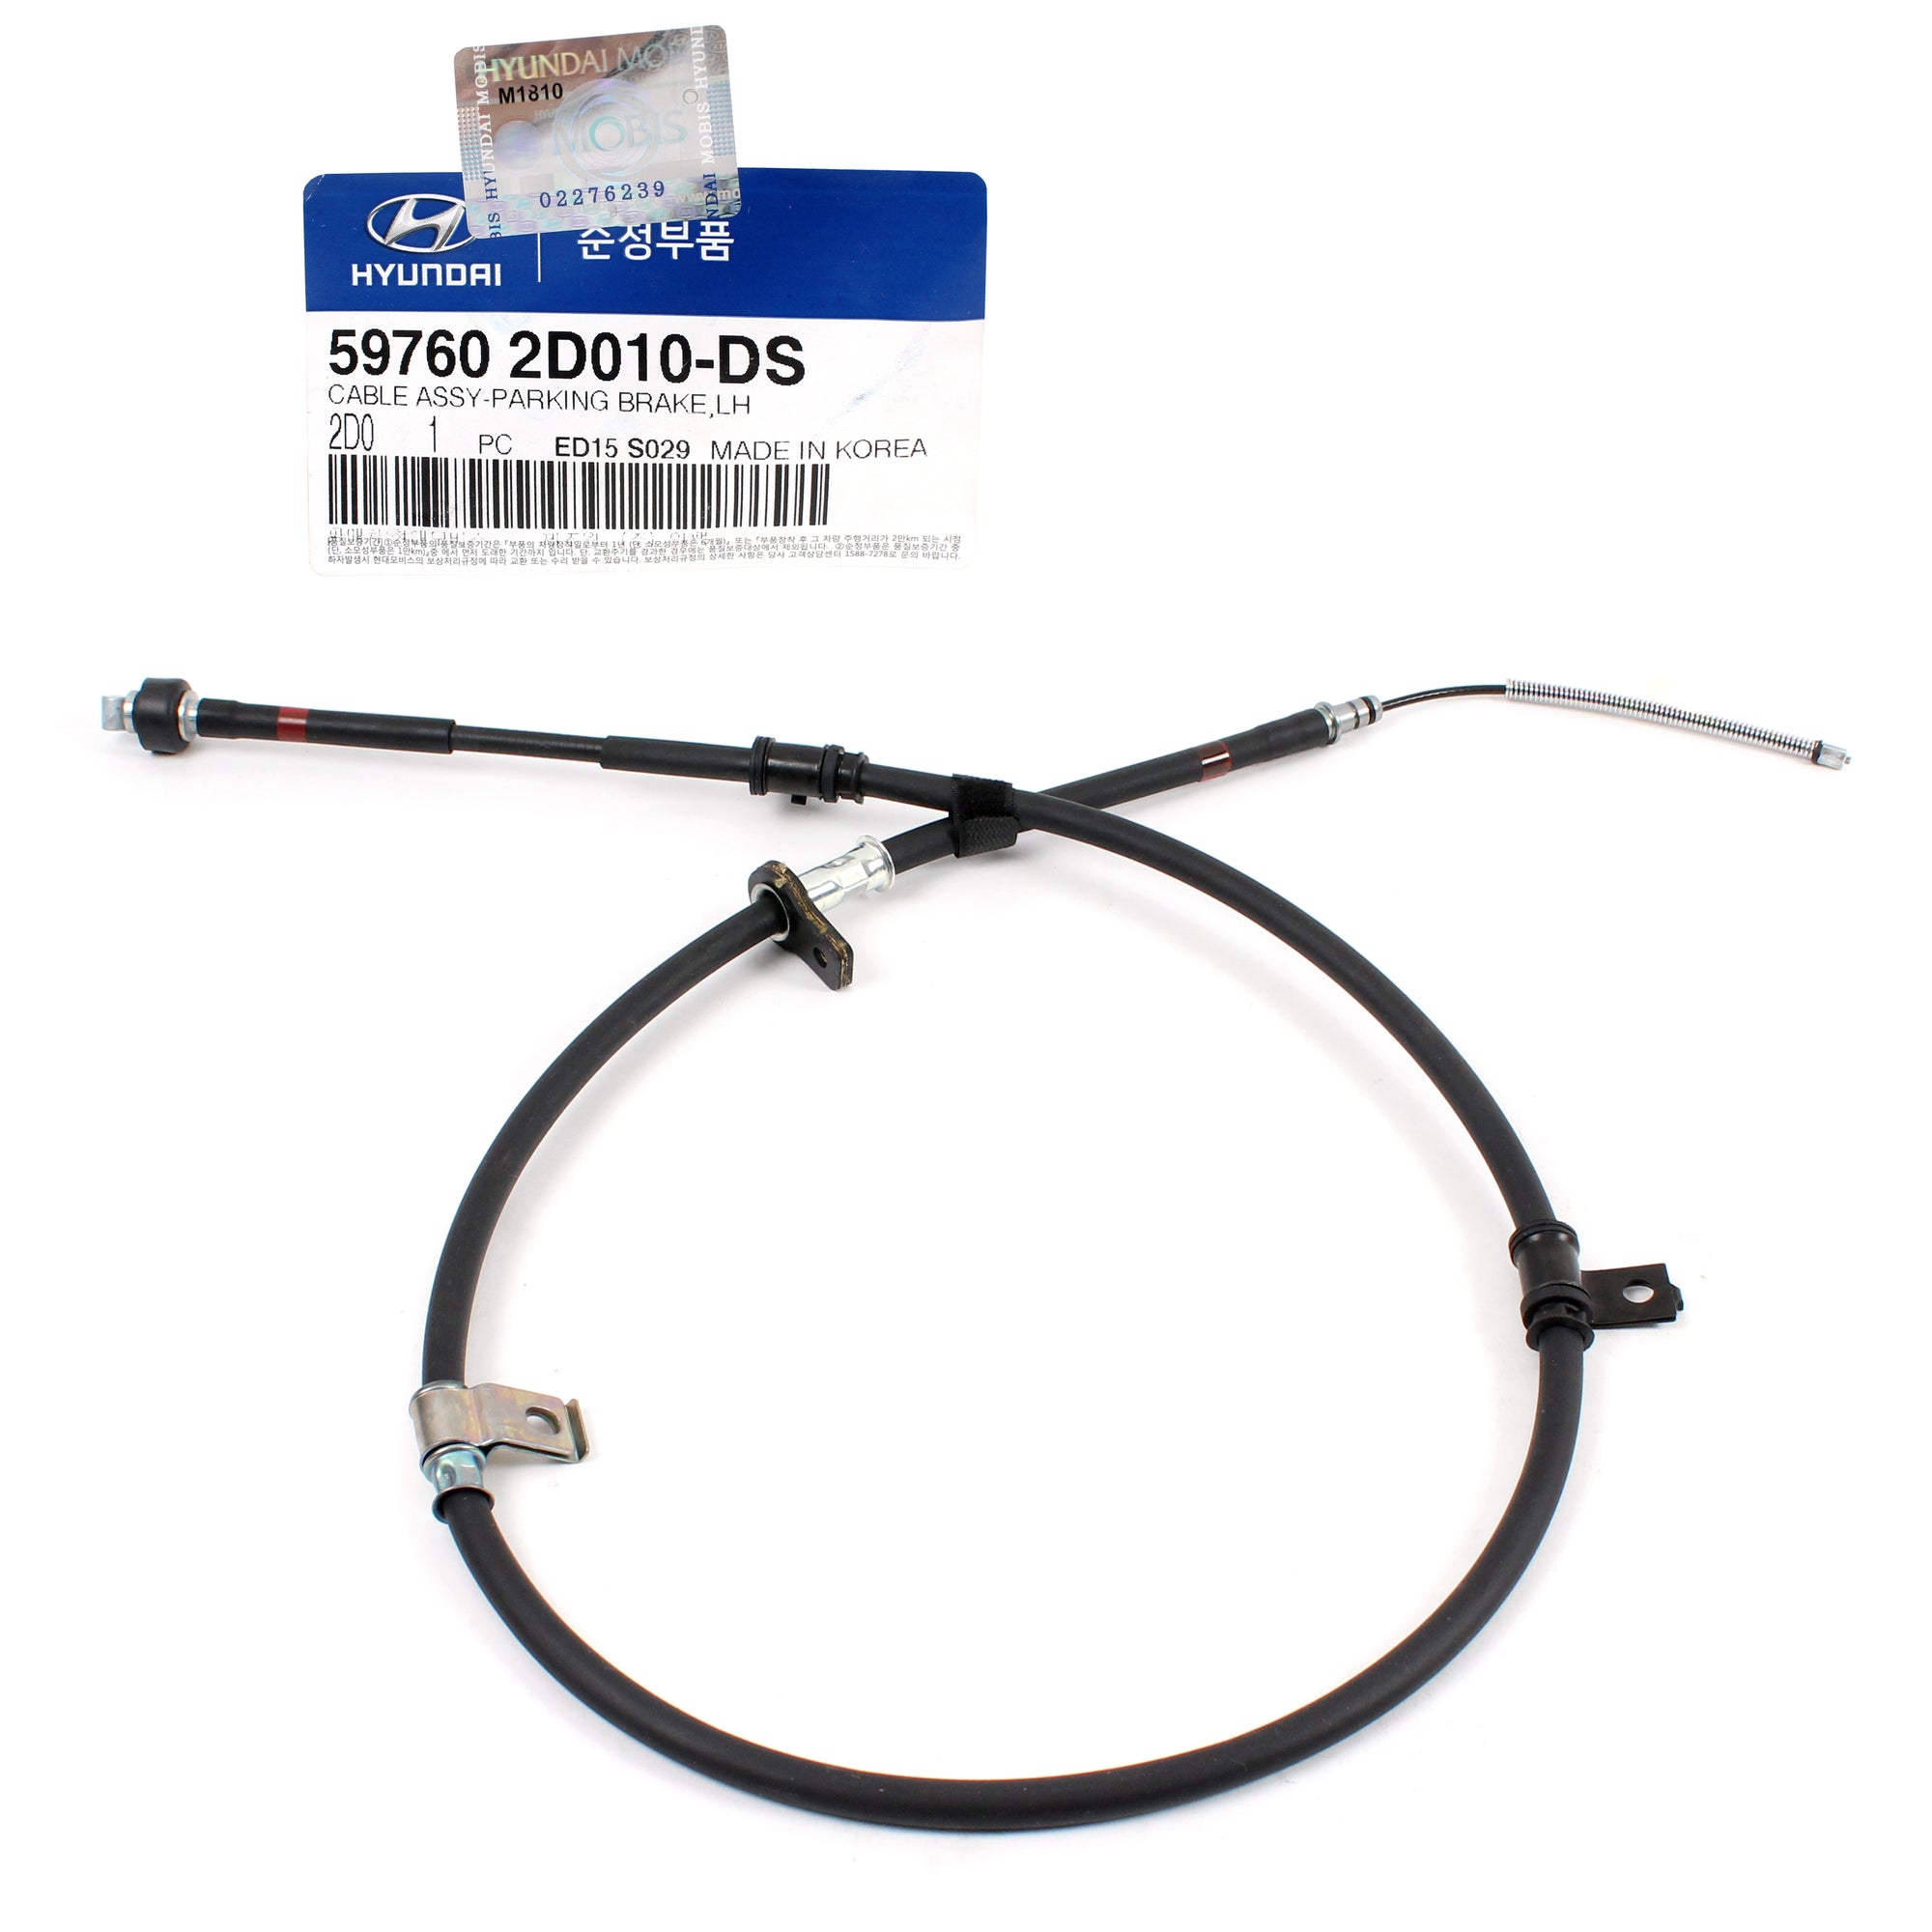 GENUINE Parking Brake Cable Rear LEFT for 2002-2004 Hyundai Elantra 597602D010